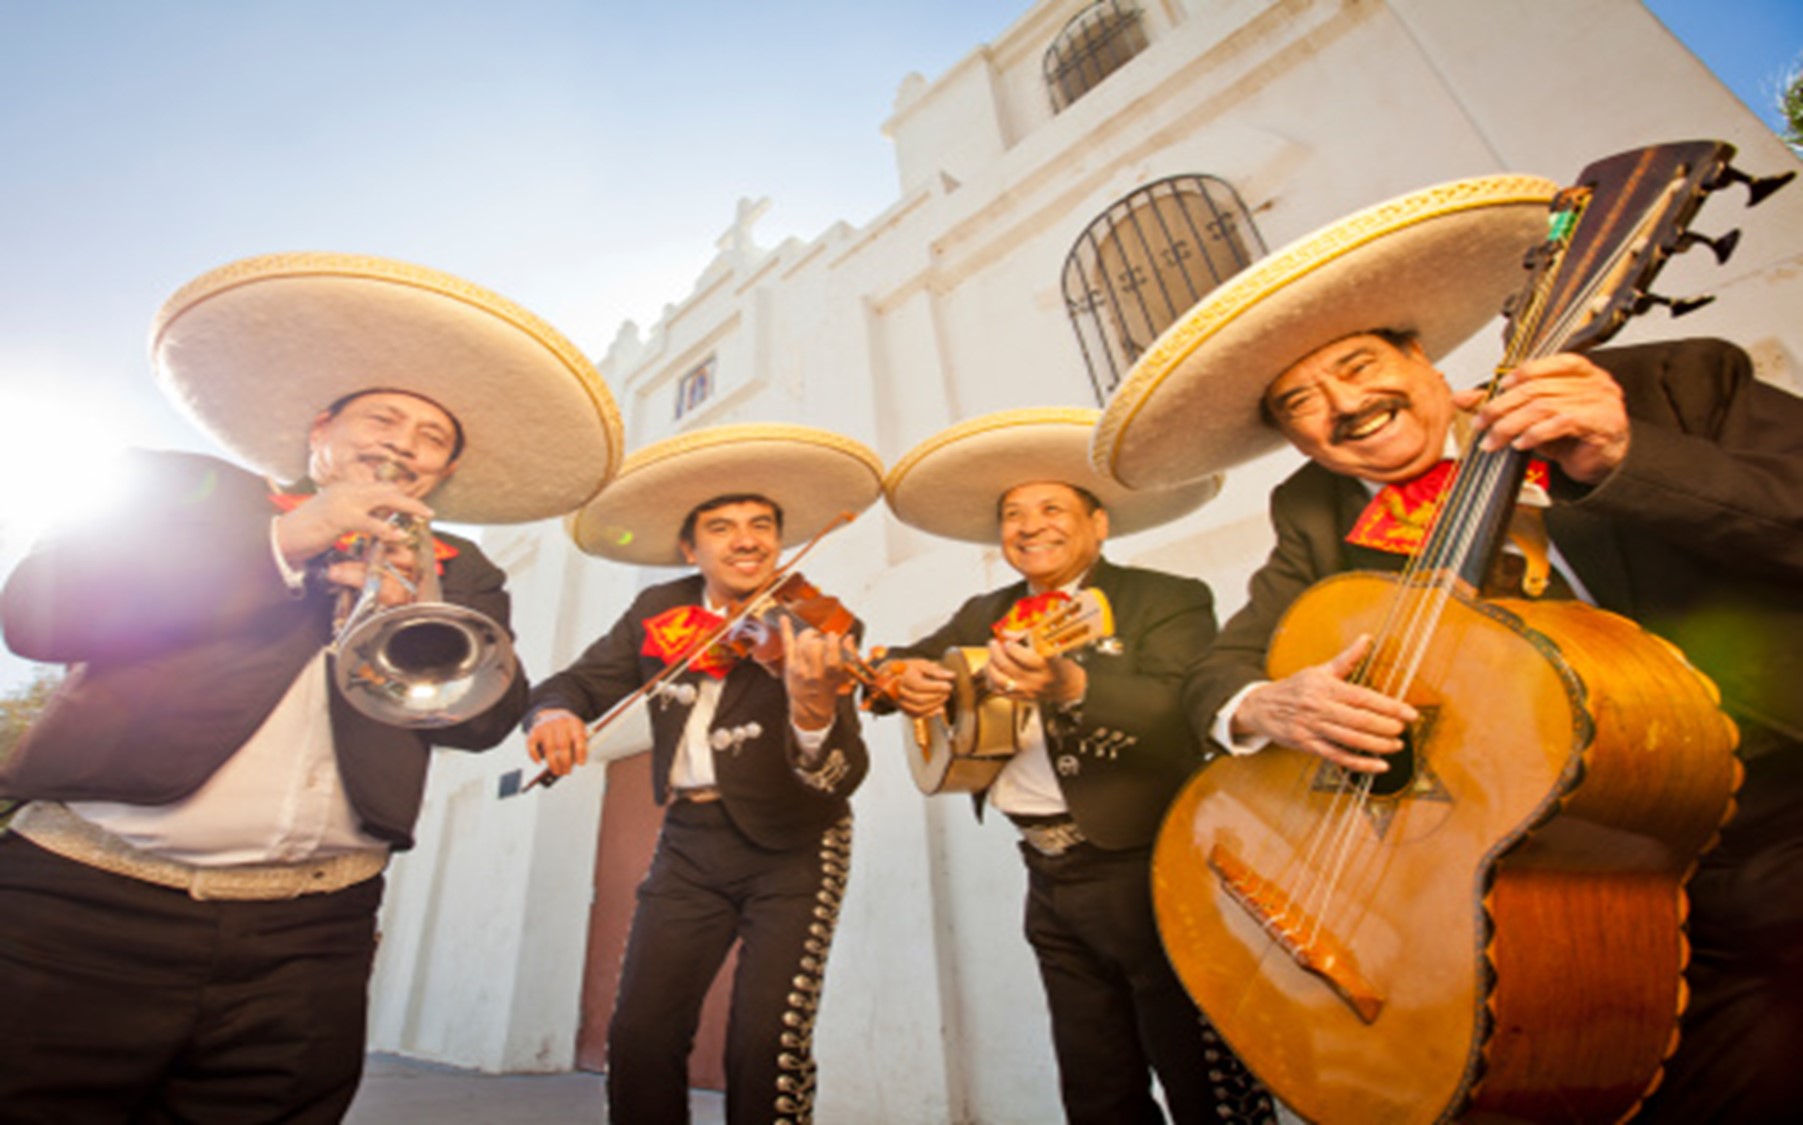 El-arte-de-la-musica-mexicana-a-traves-de-la-historia-2